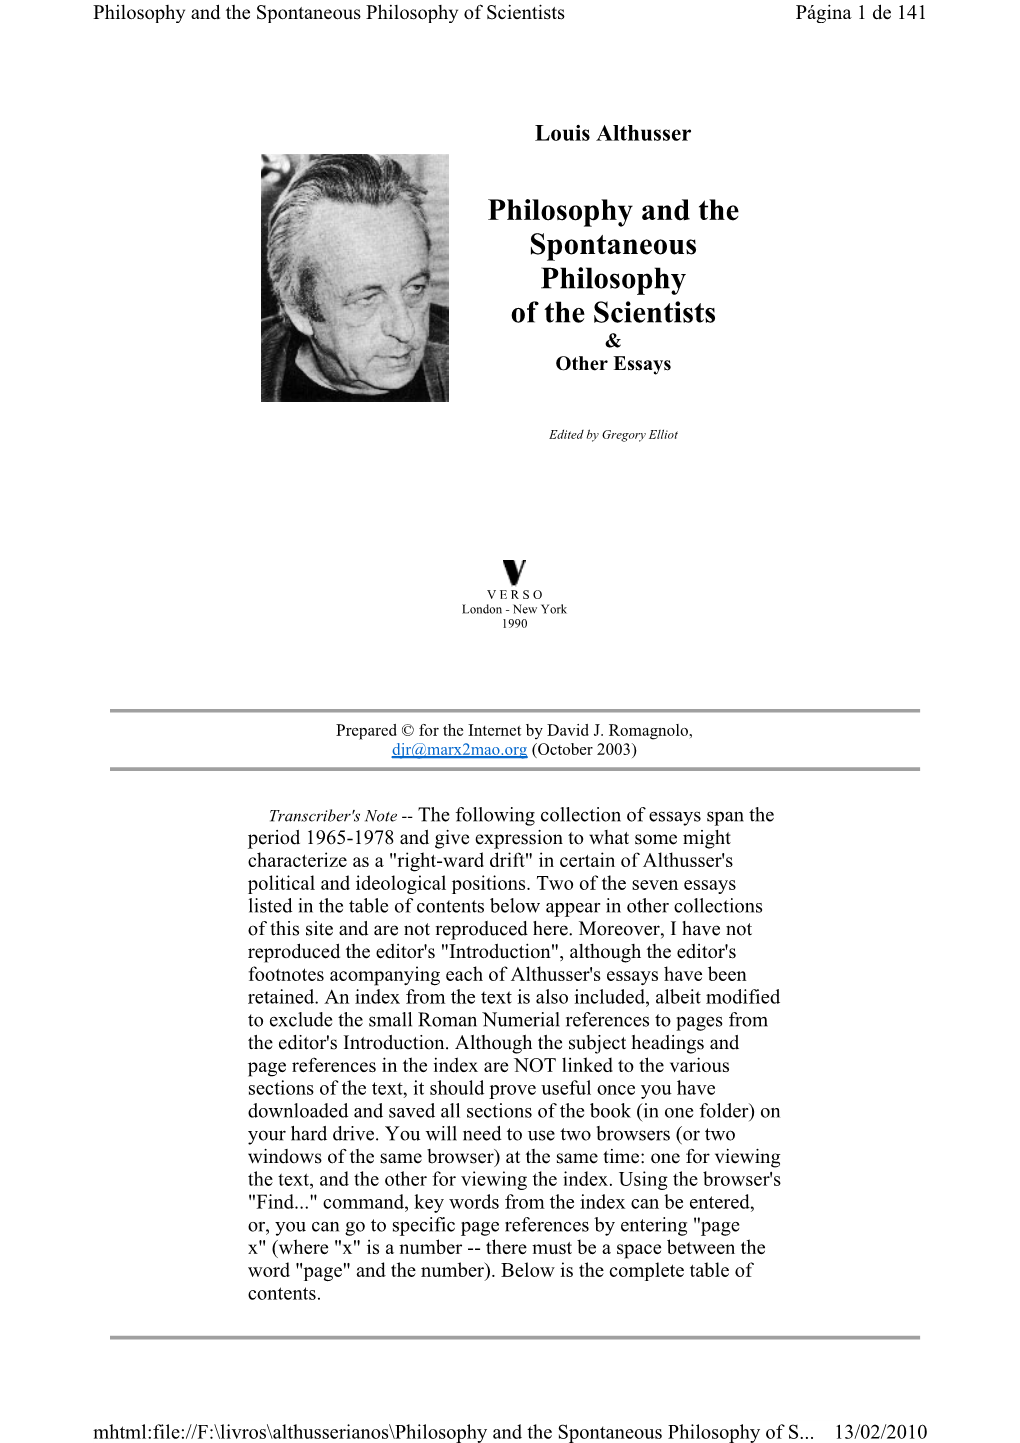 Philosophy and the Spontaneous Philosophy of Scientists Página 1 De 141